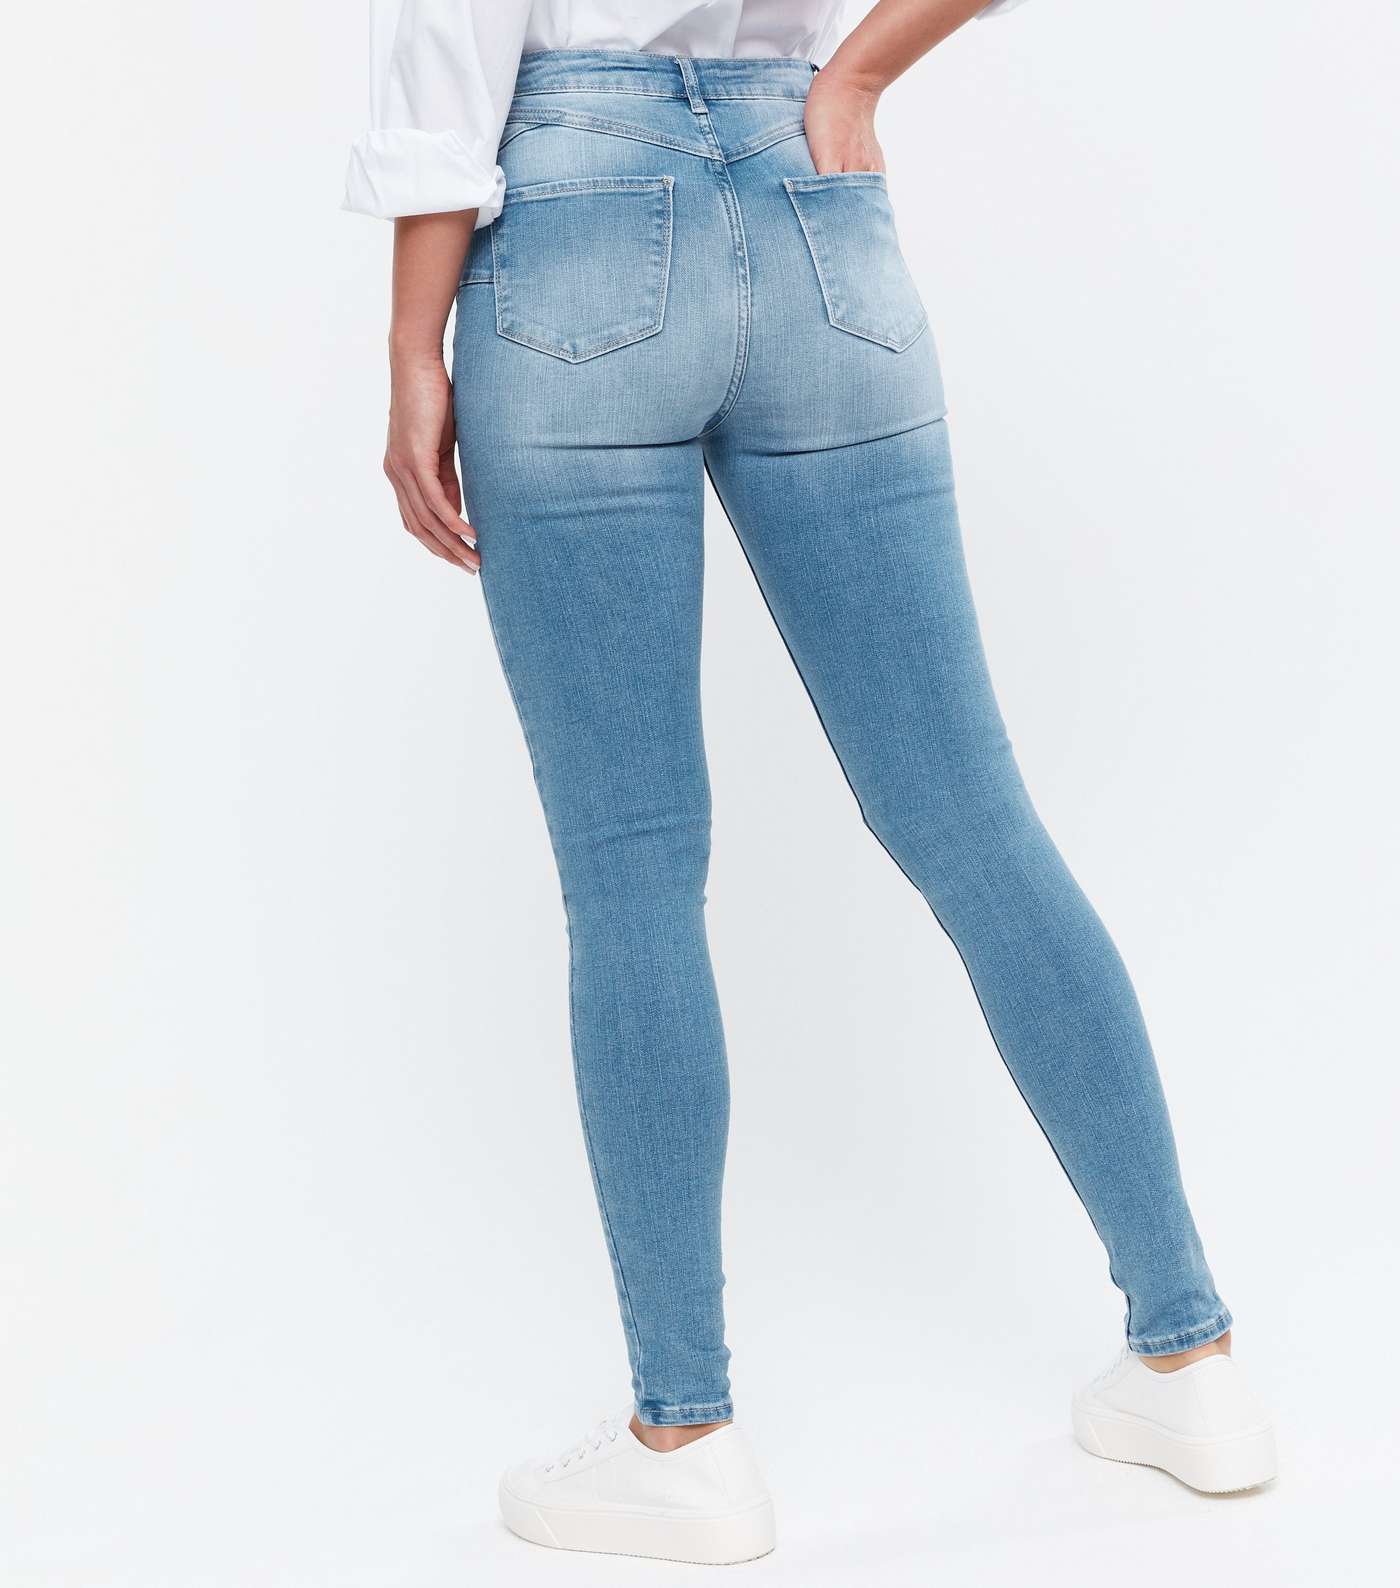 Tall Pale Blue 'Lift & Shape' Jenna Skinny Jeans Image 4